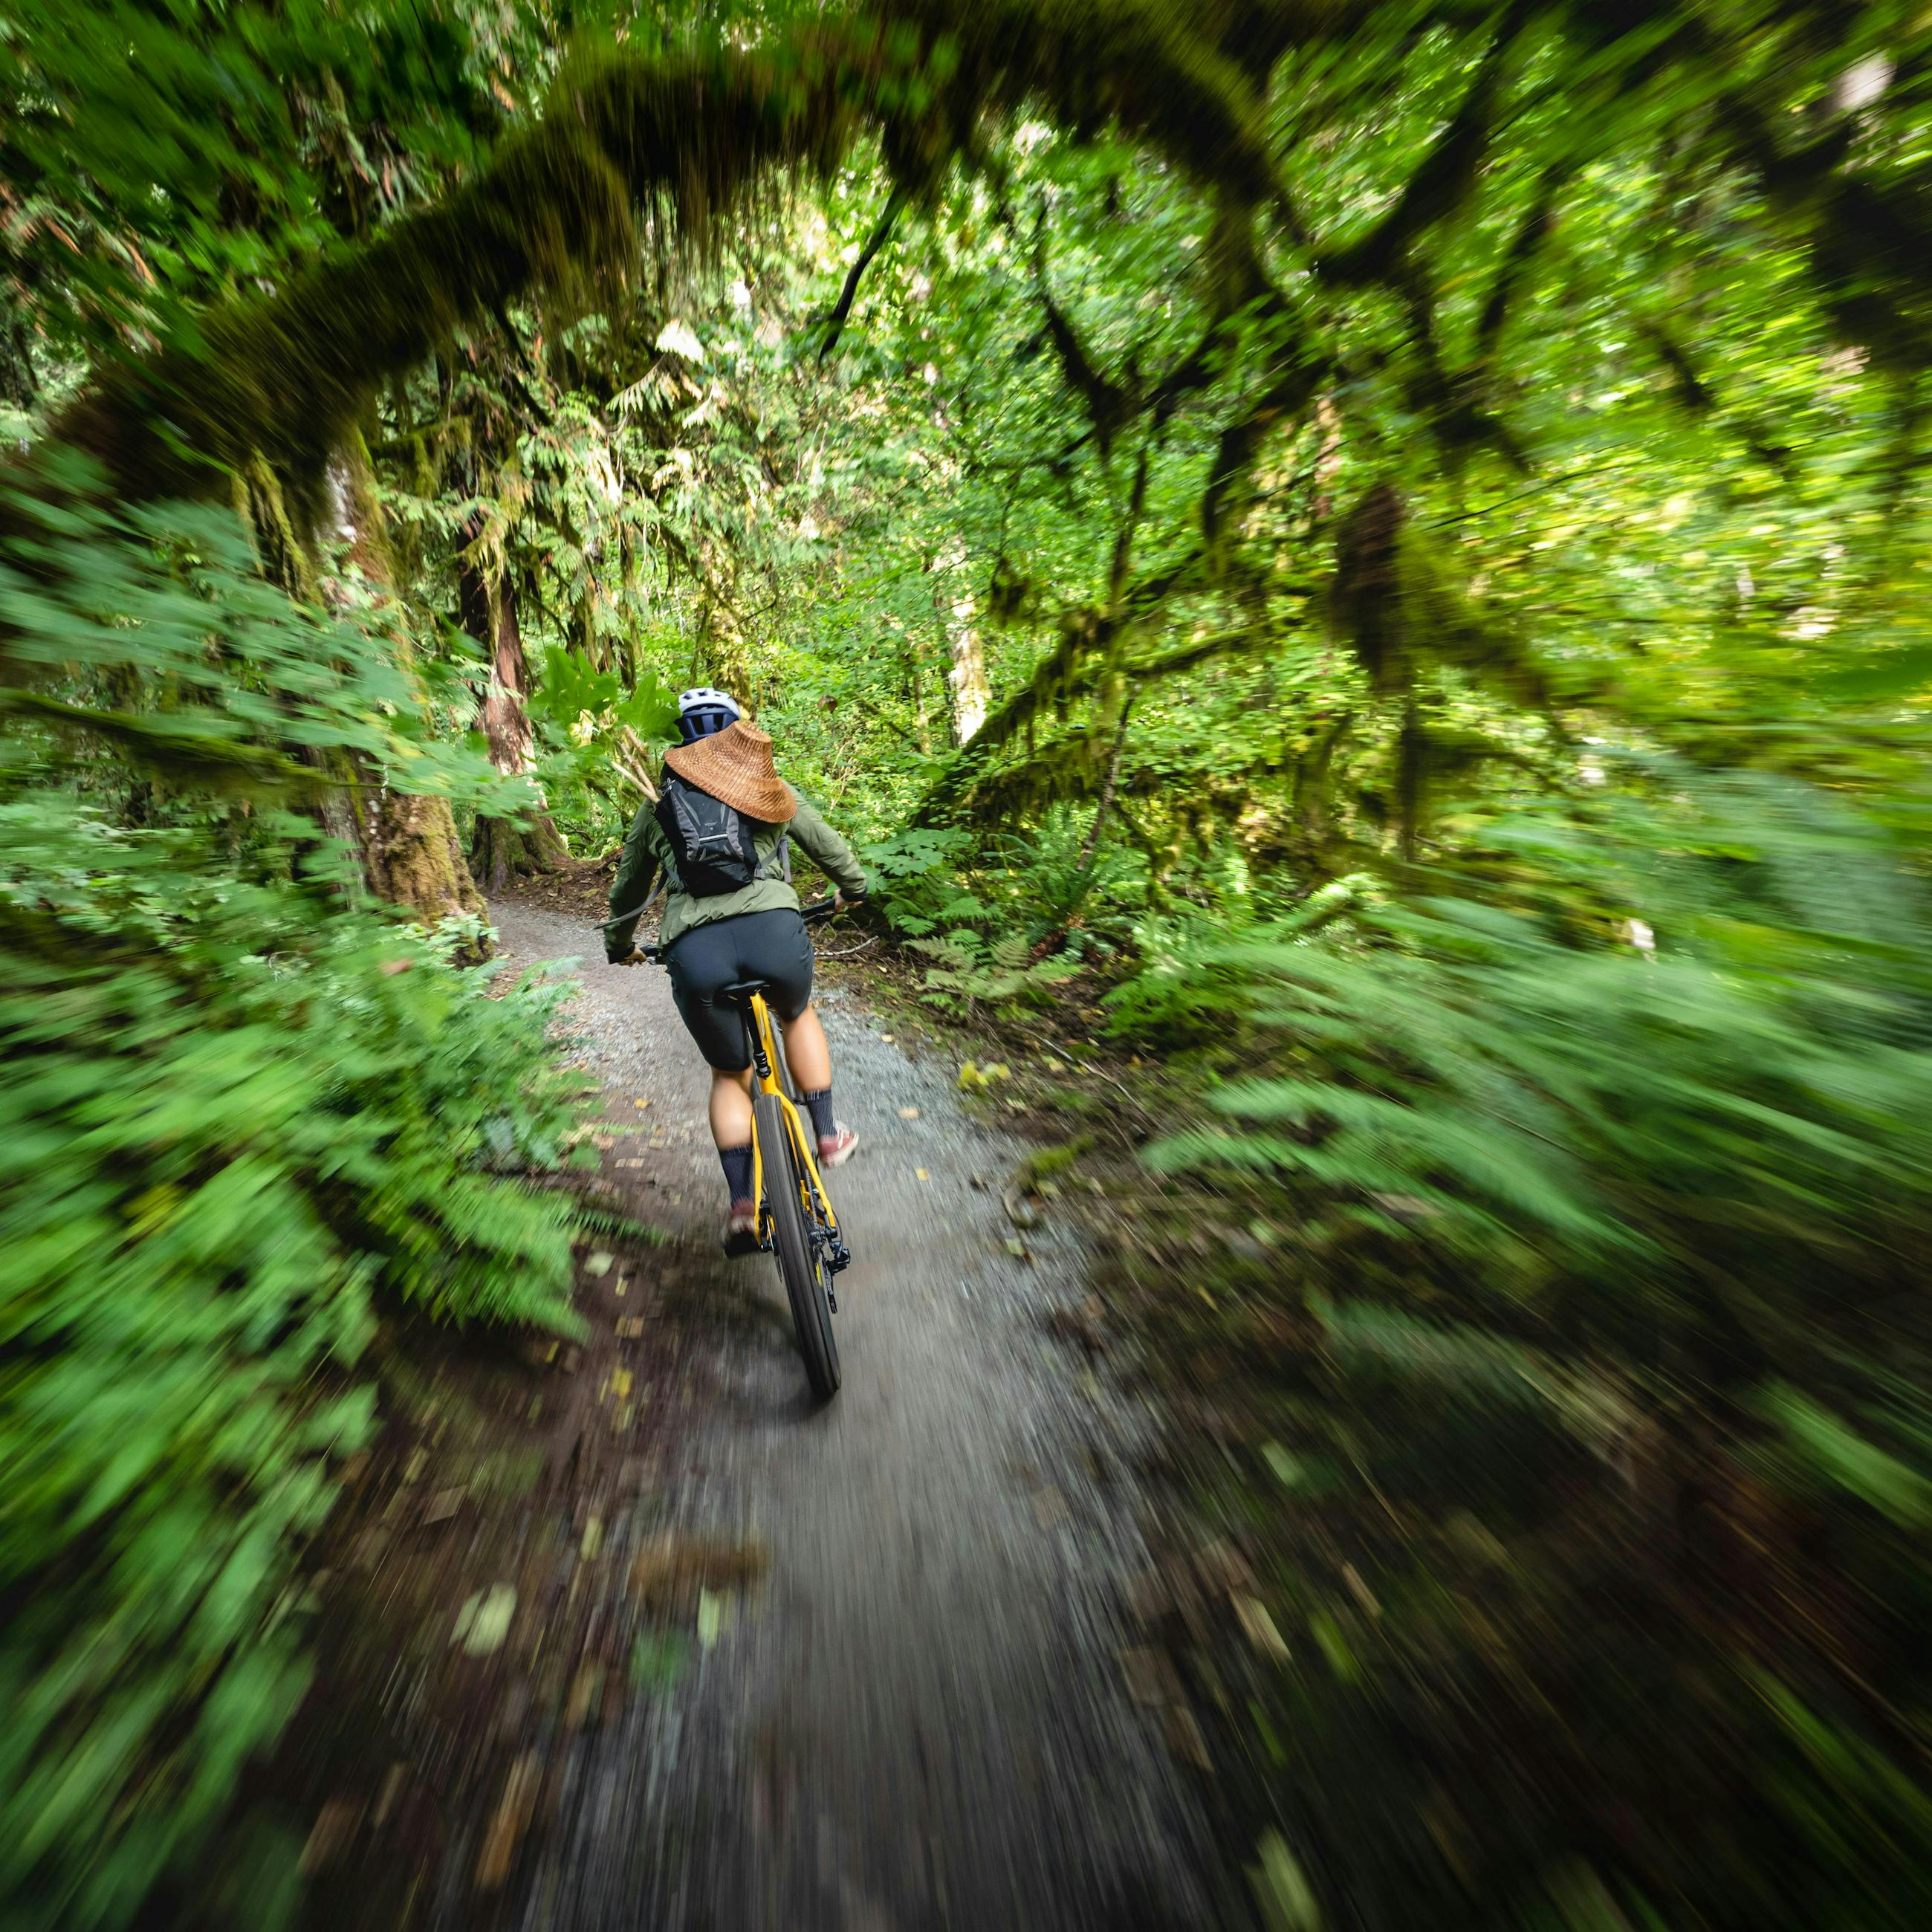 Mountain Biking Fast in the Woods